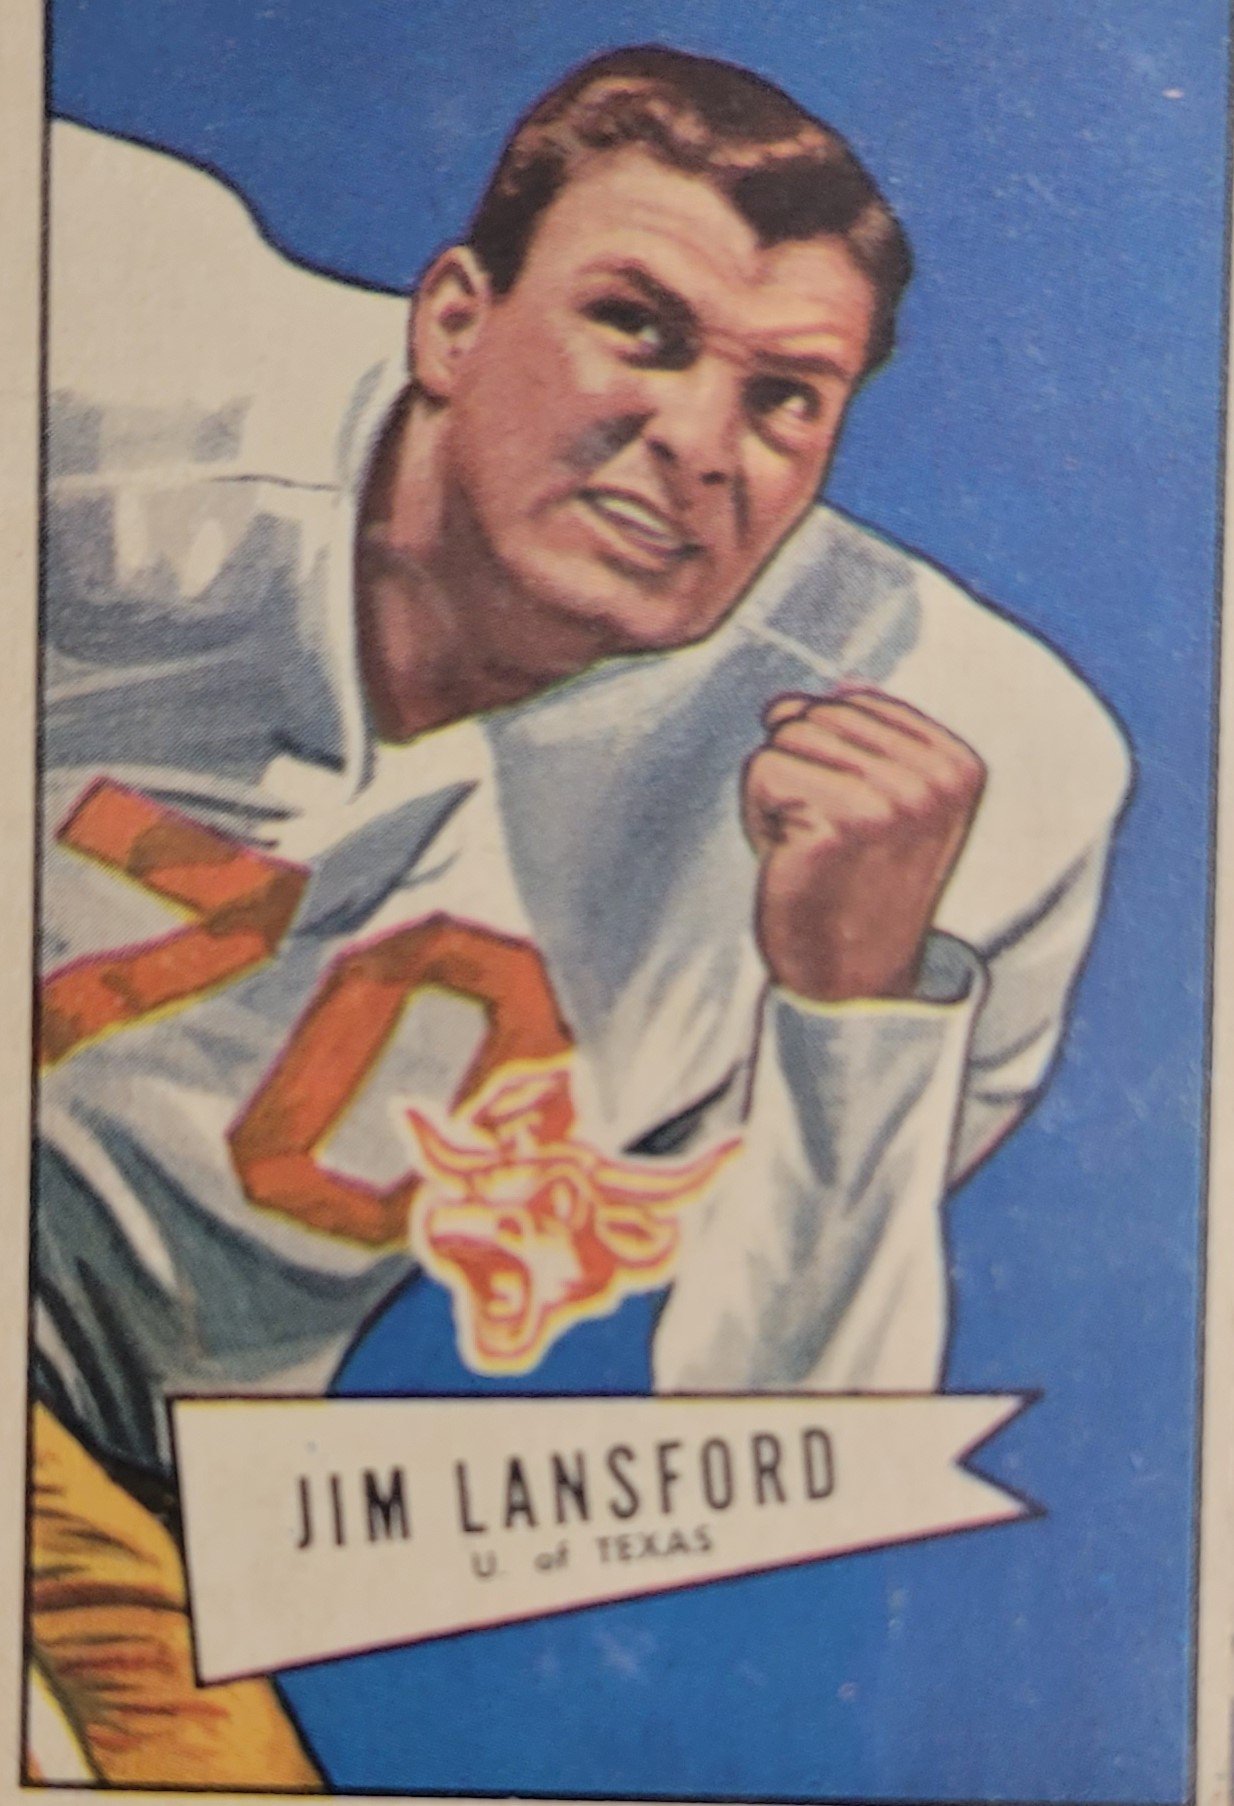 1950 Jim Lansford 